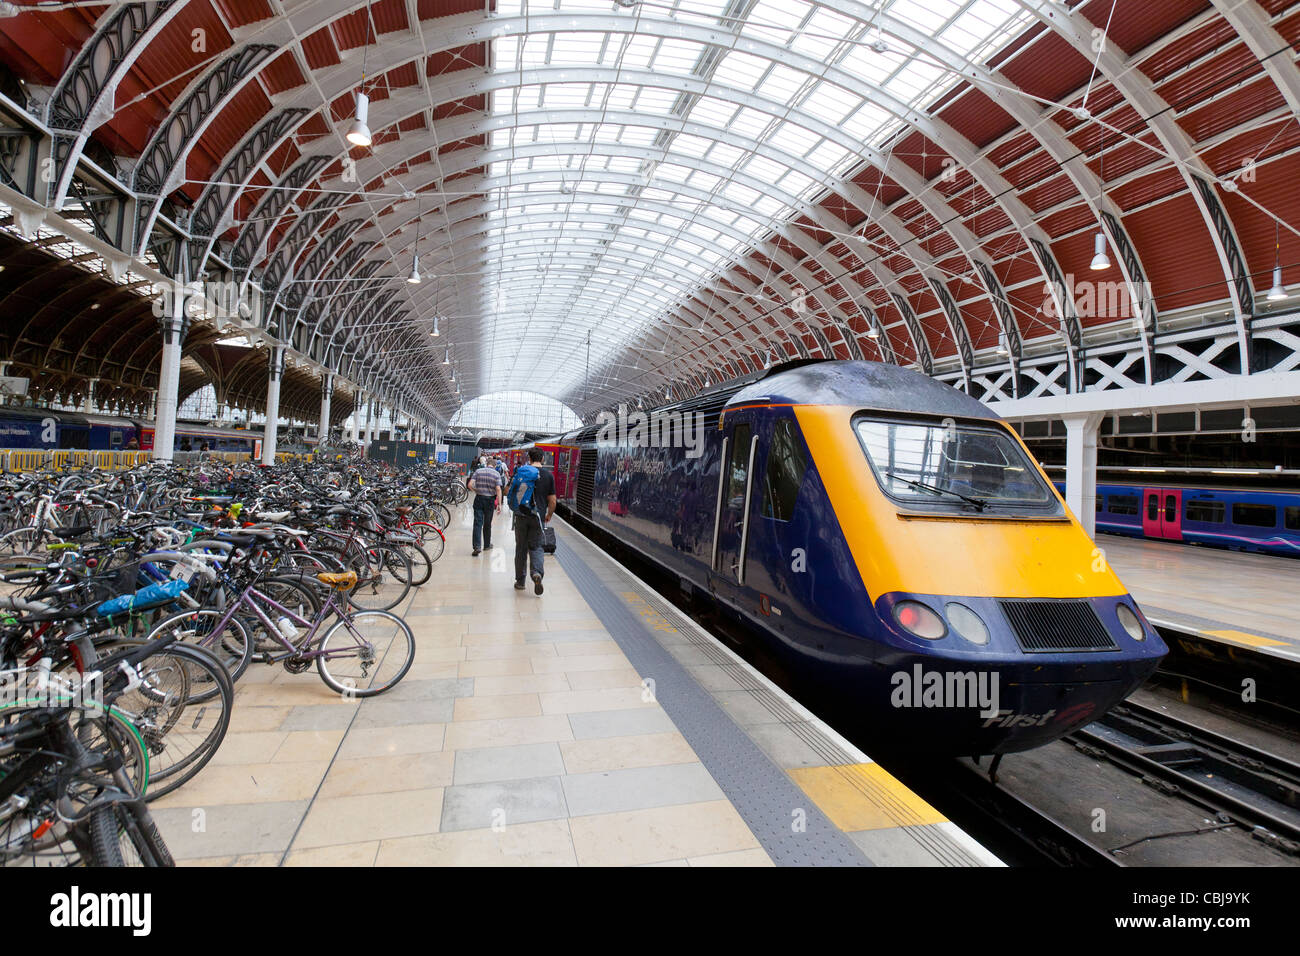 Passengers, commuters and travelers in Paddington Rail Station, London, England. Stock Photo